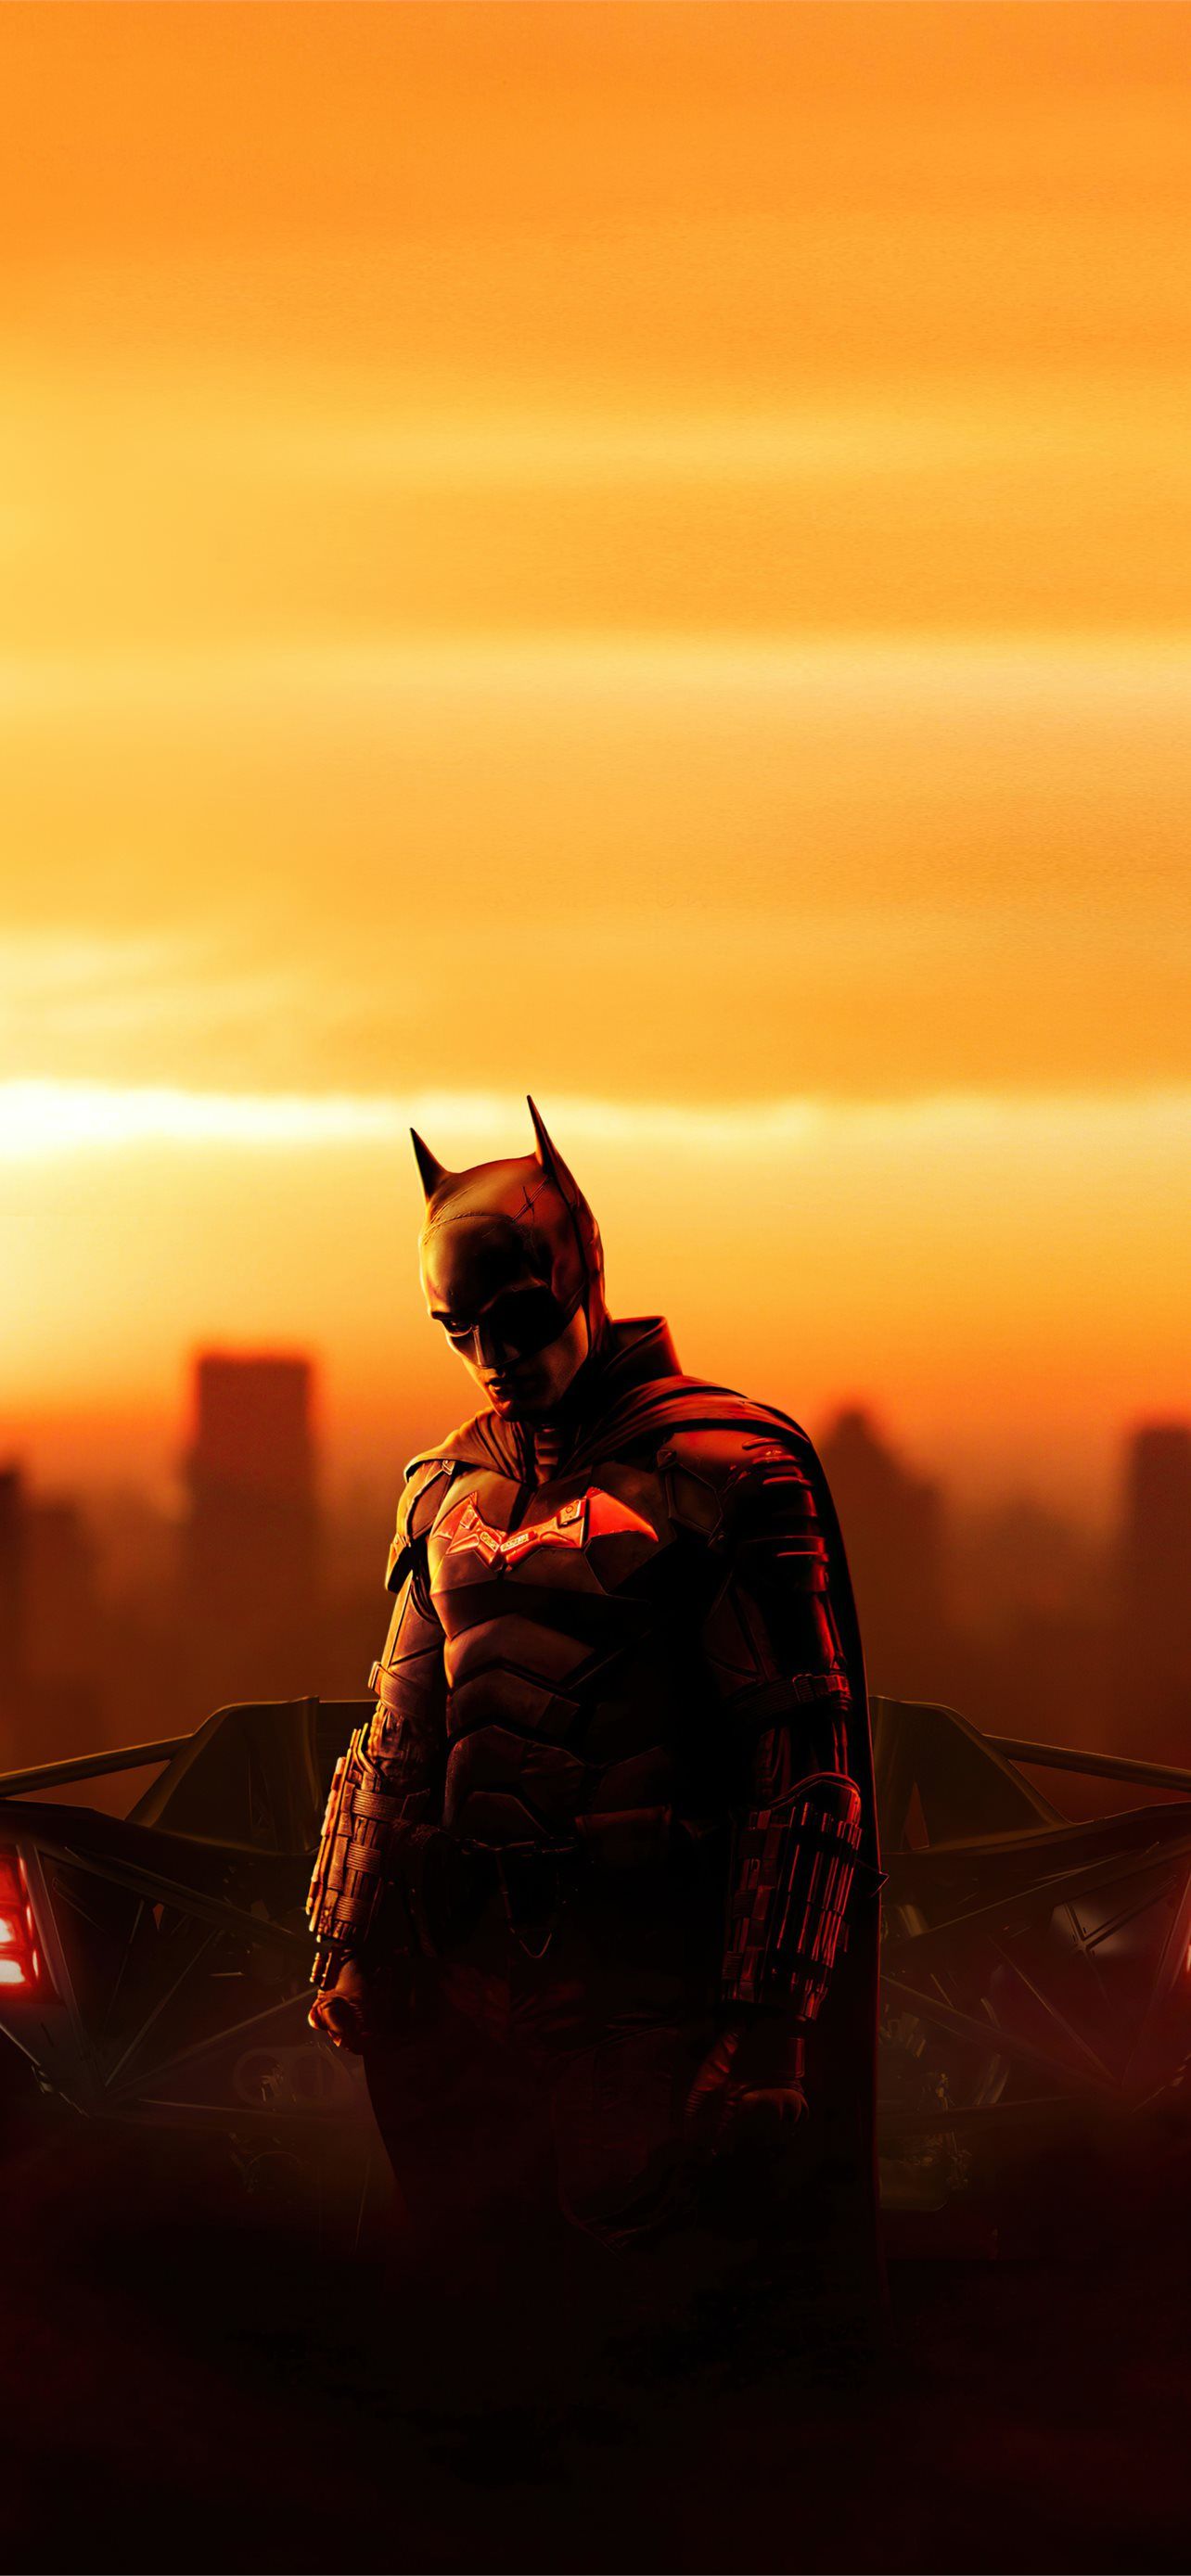  Batman Hintergrundbild 1284x2778. the batman movie 4k iPhone Wallpaper Free Download